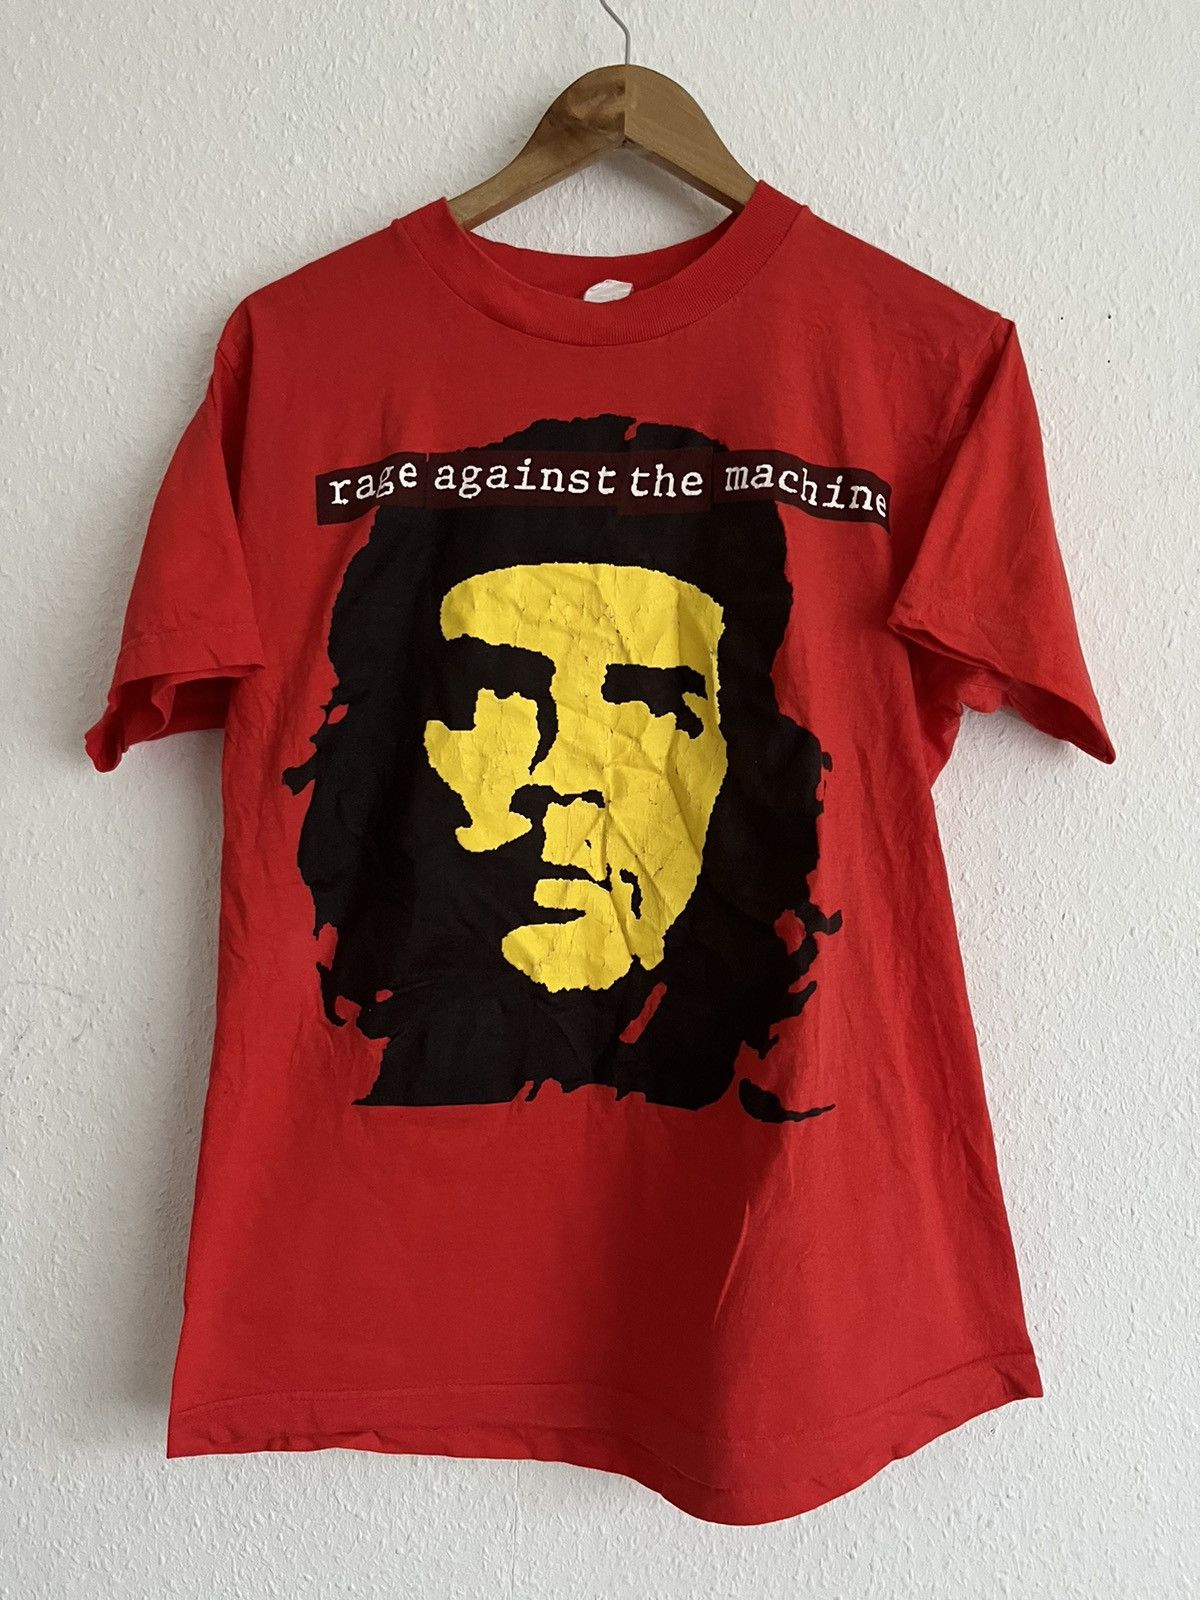 Vintage Che Guevara T-shirt